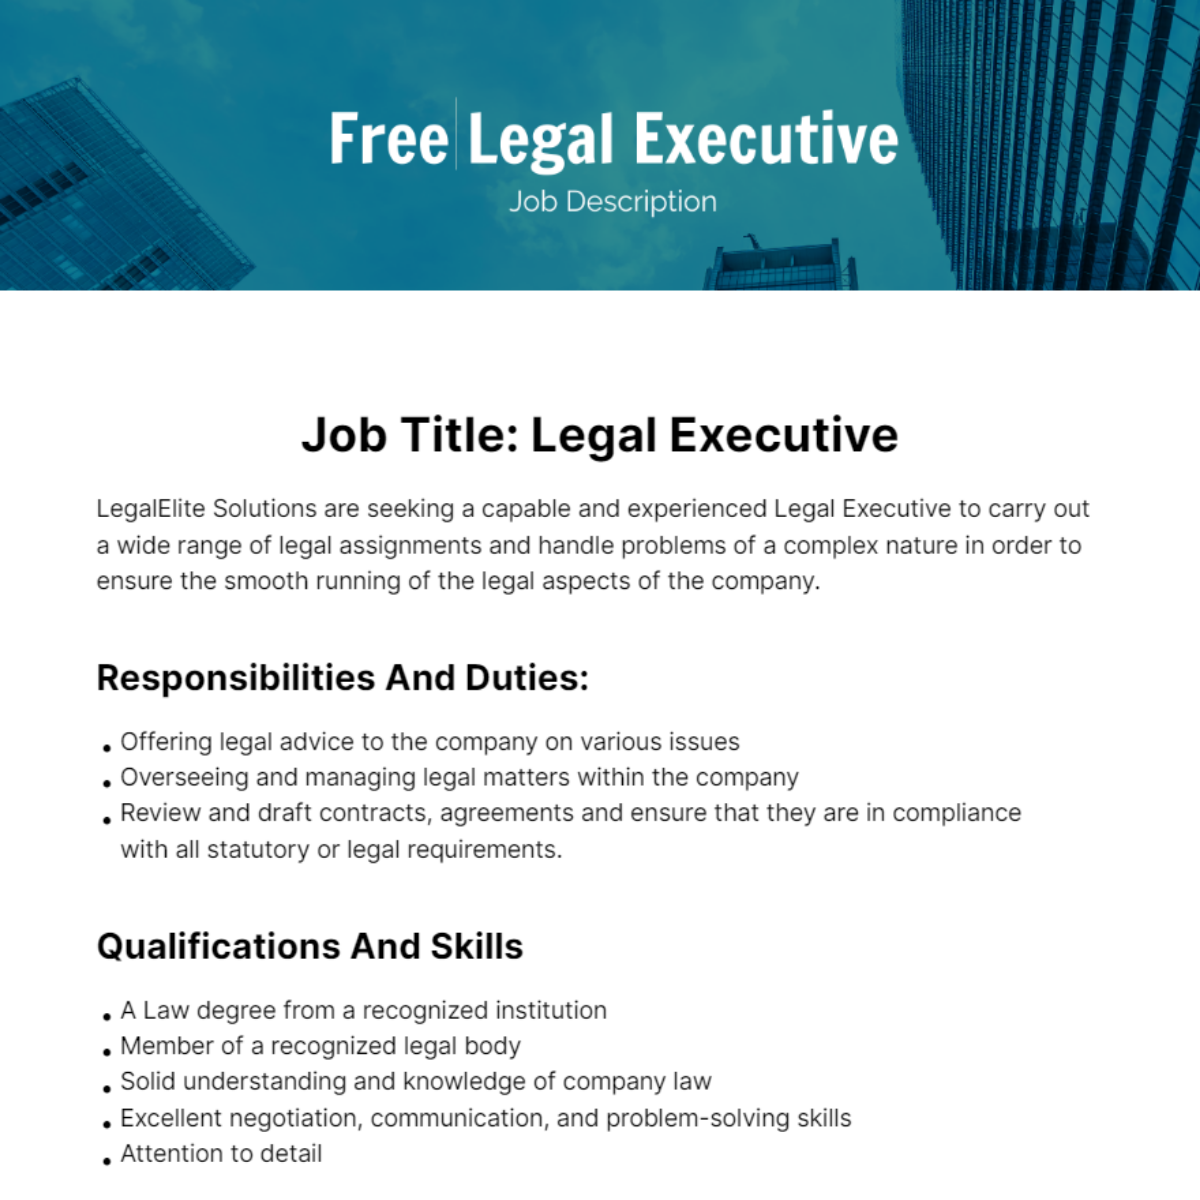 Free Legal Executive Job Description Template